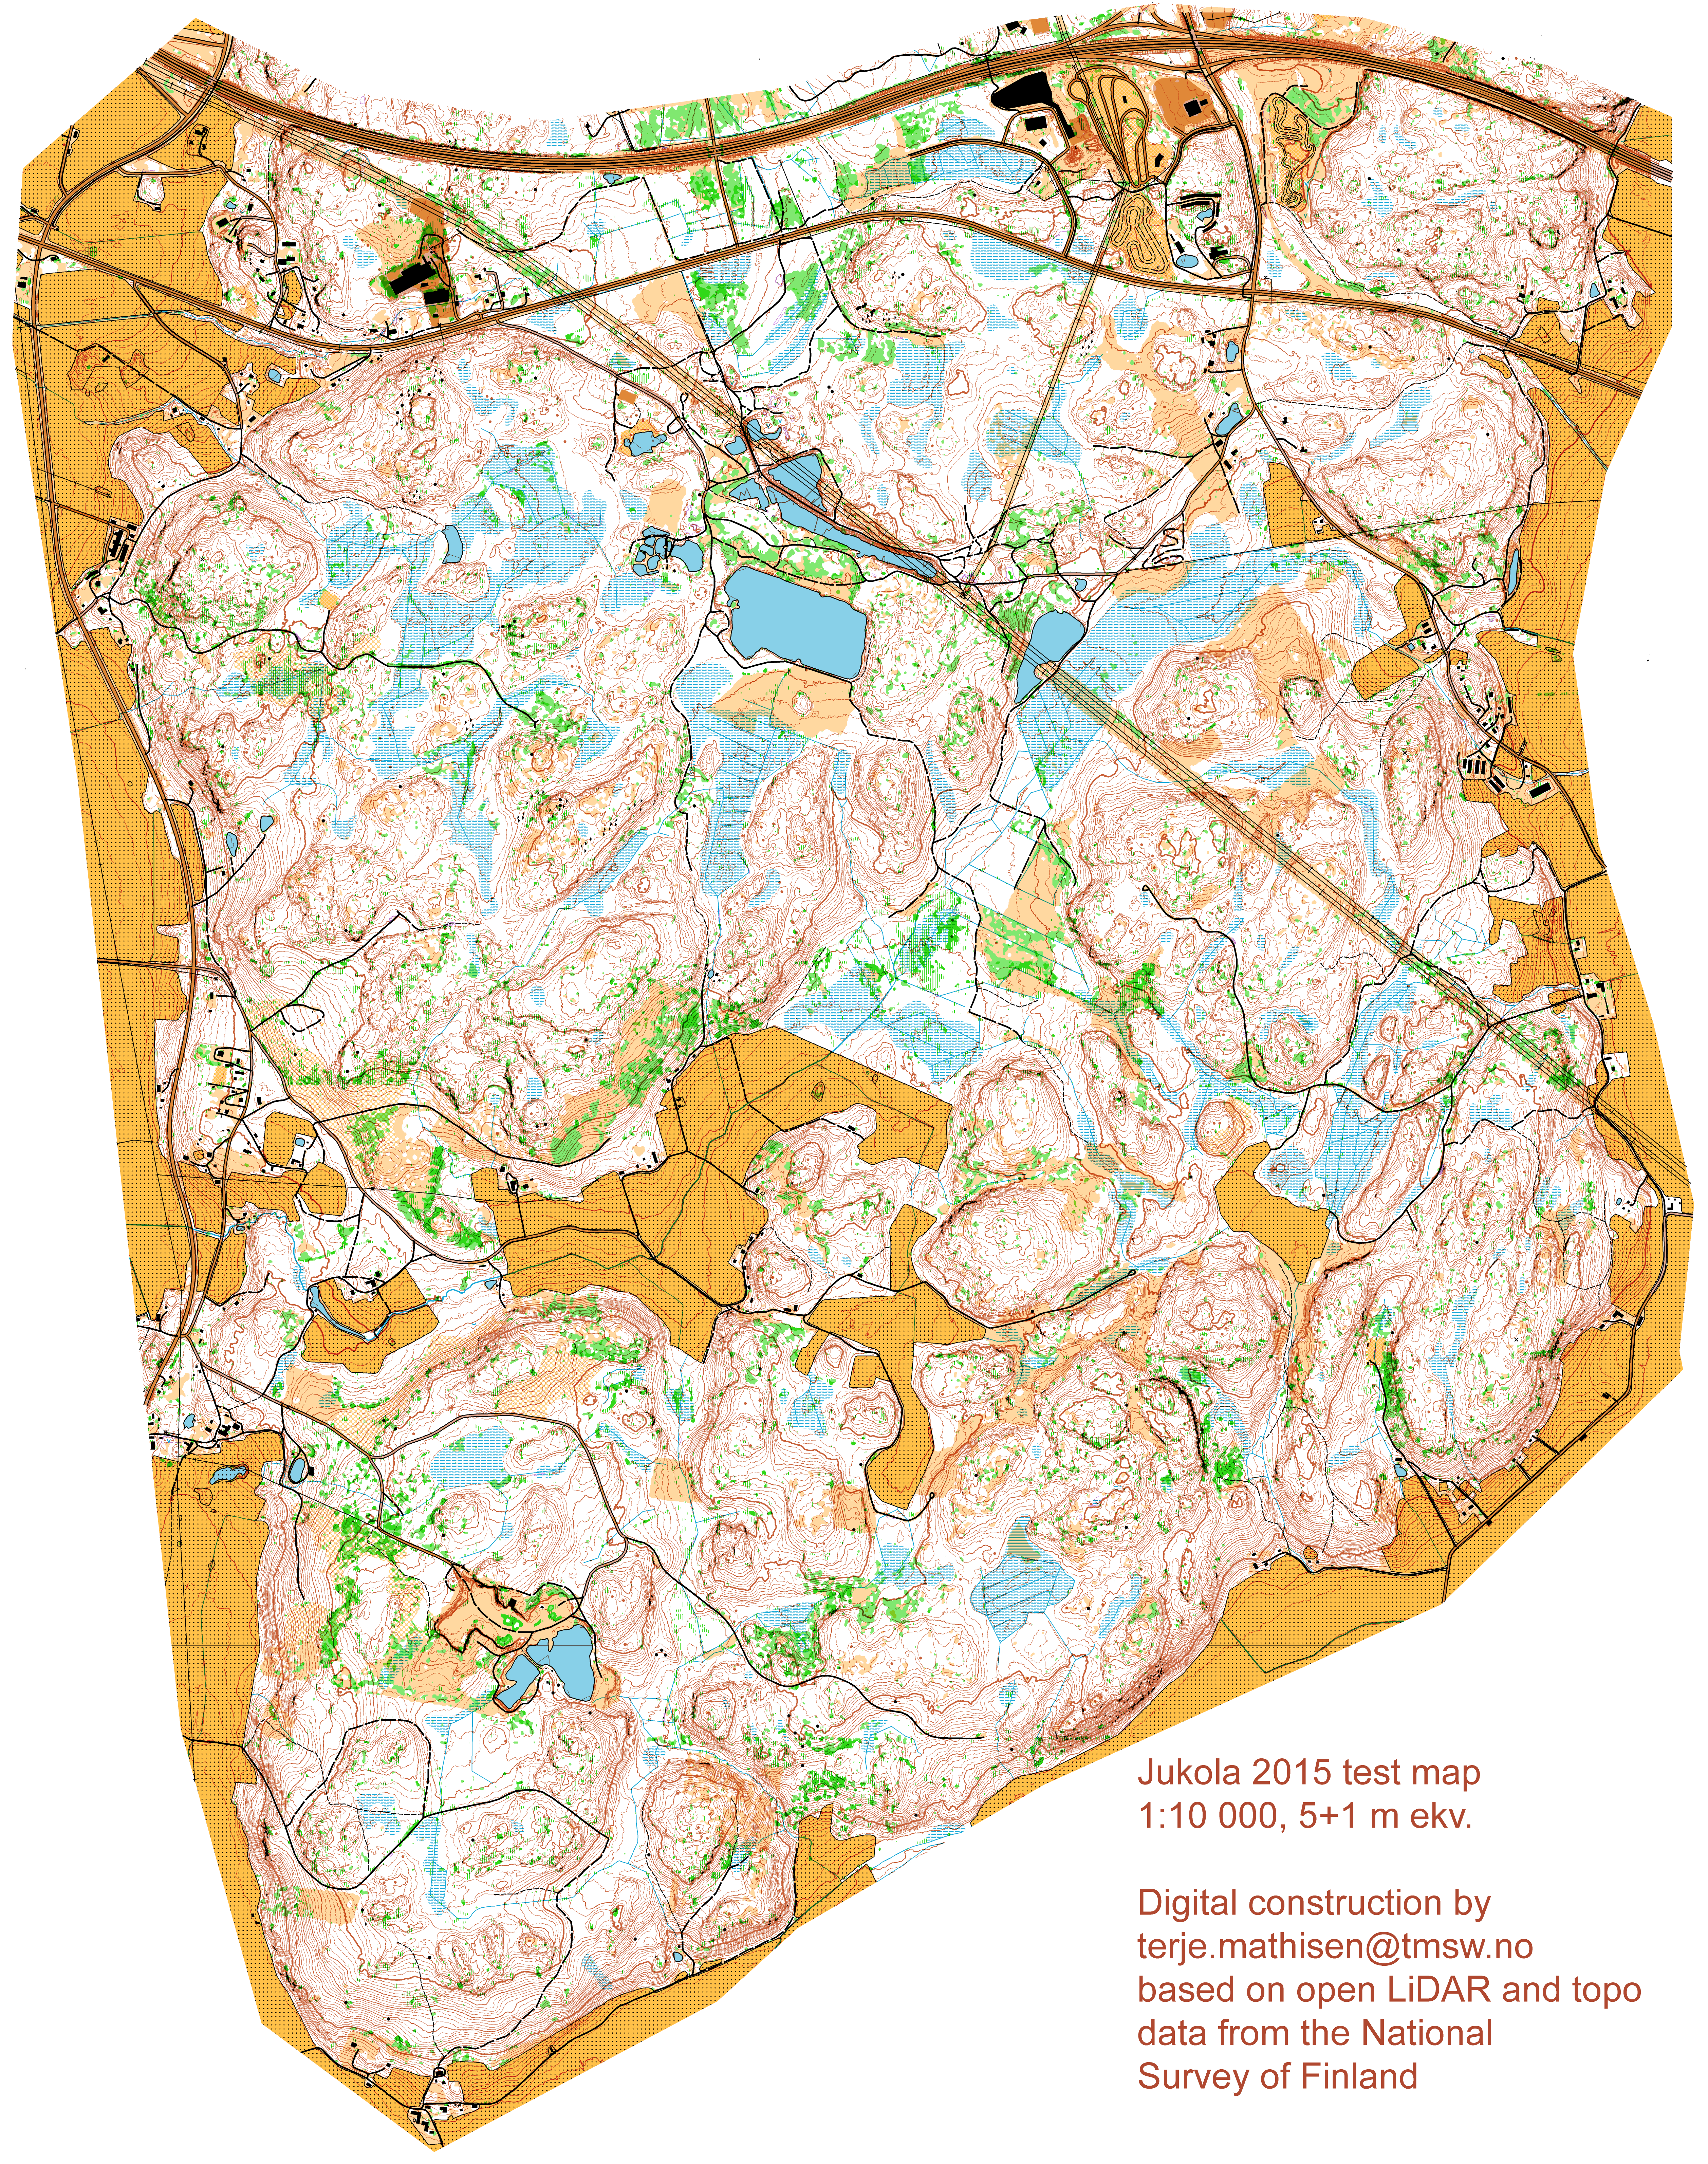 Jukola 2015 test map ver 2 (19/06/2014)